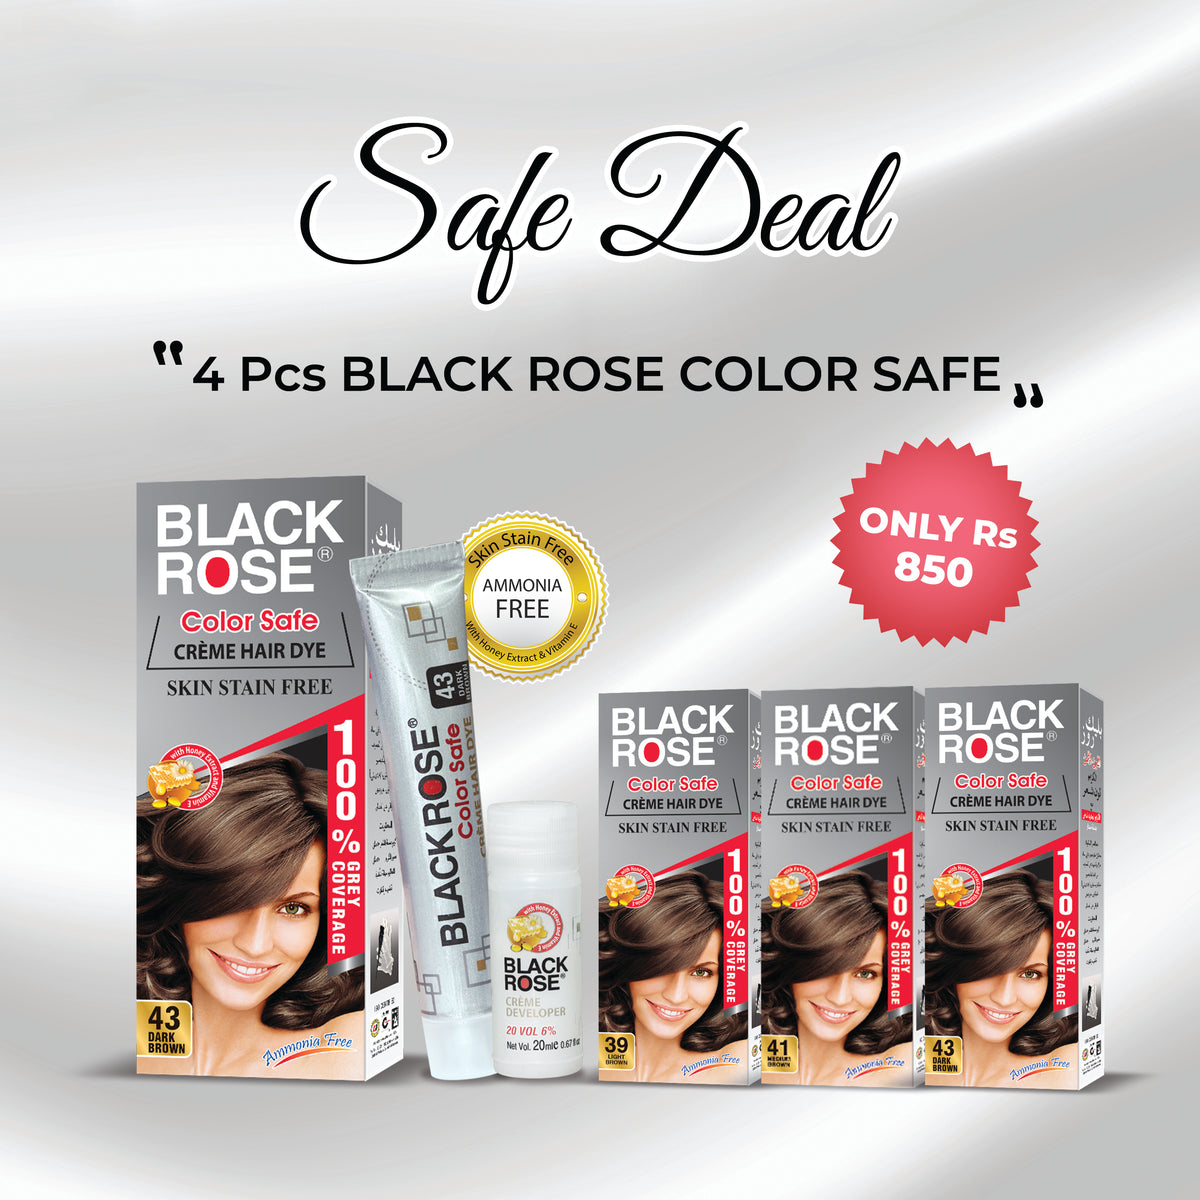 Buy 4 pieces of Black Rose Color Safe